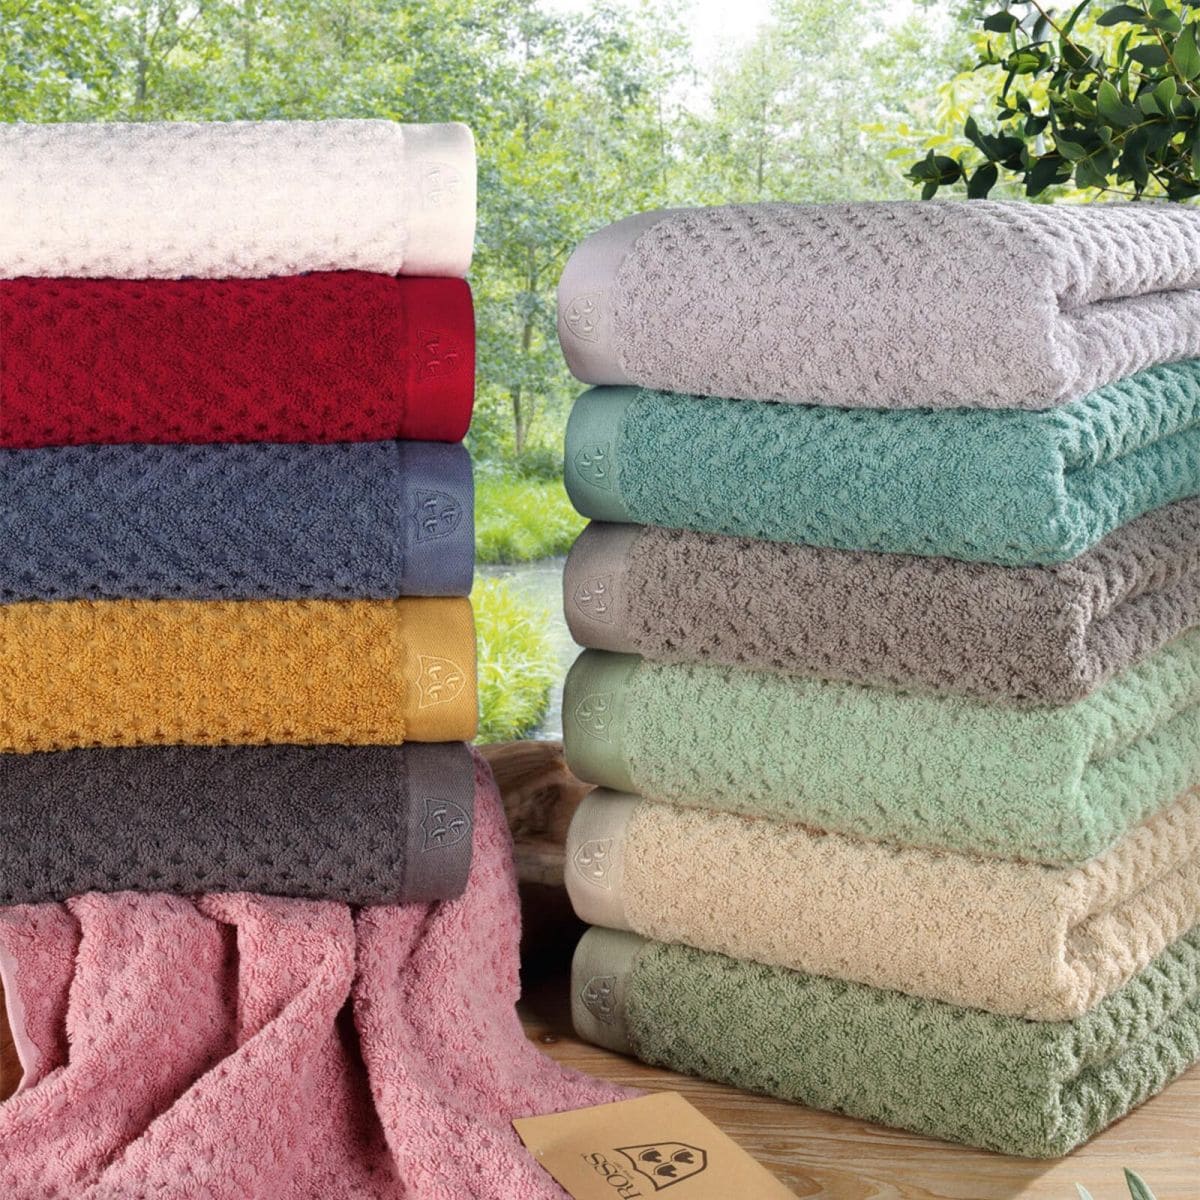 günstig Ross bei Uni-Walk Farbfond Shop kaufen Harmony Bettwaren Handtücher online